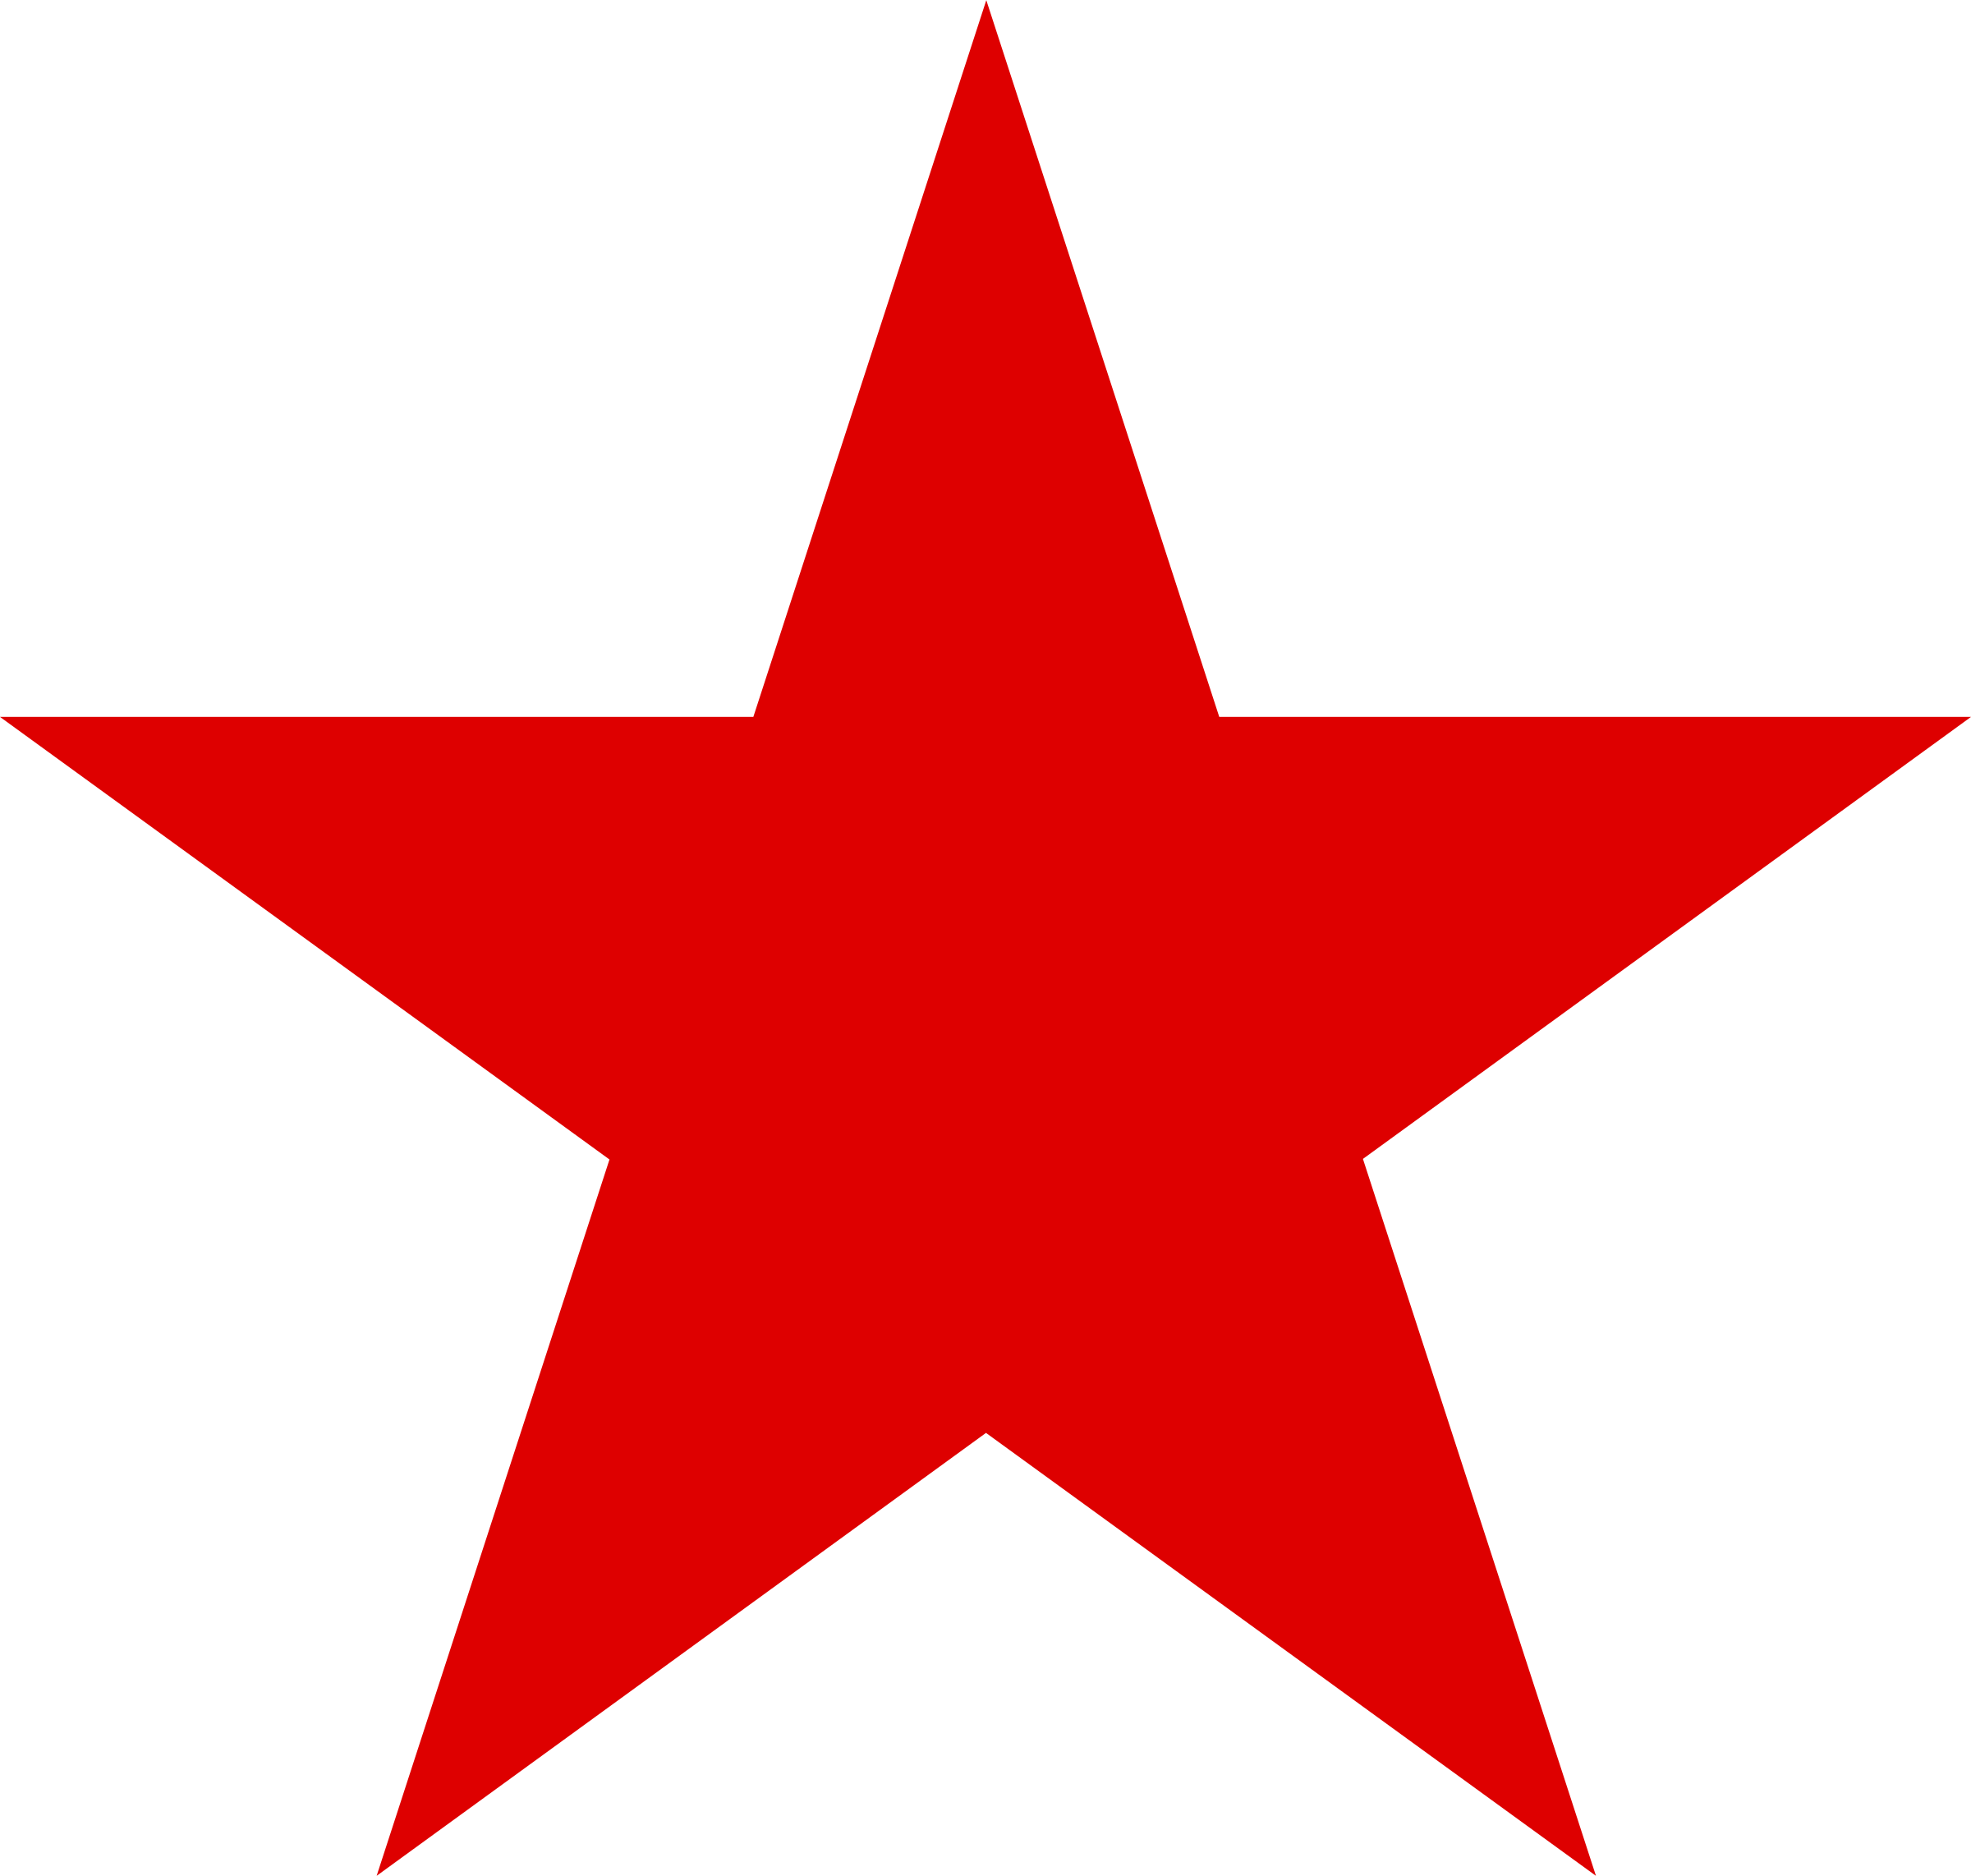 1 Star Logo - Red Star Logo PNG Transparent & SVG Vector - Freebie Supply